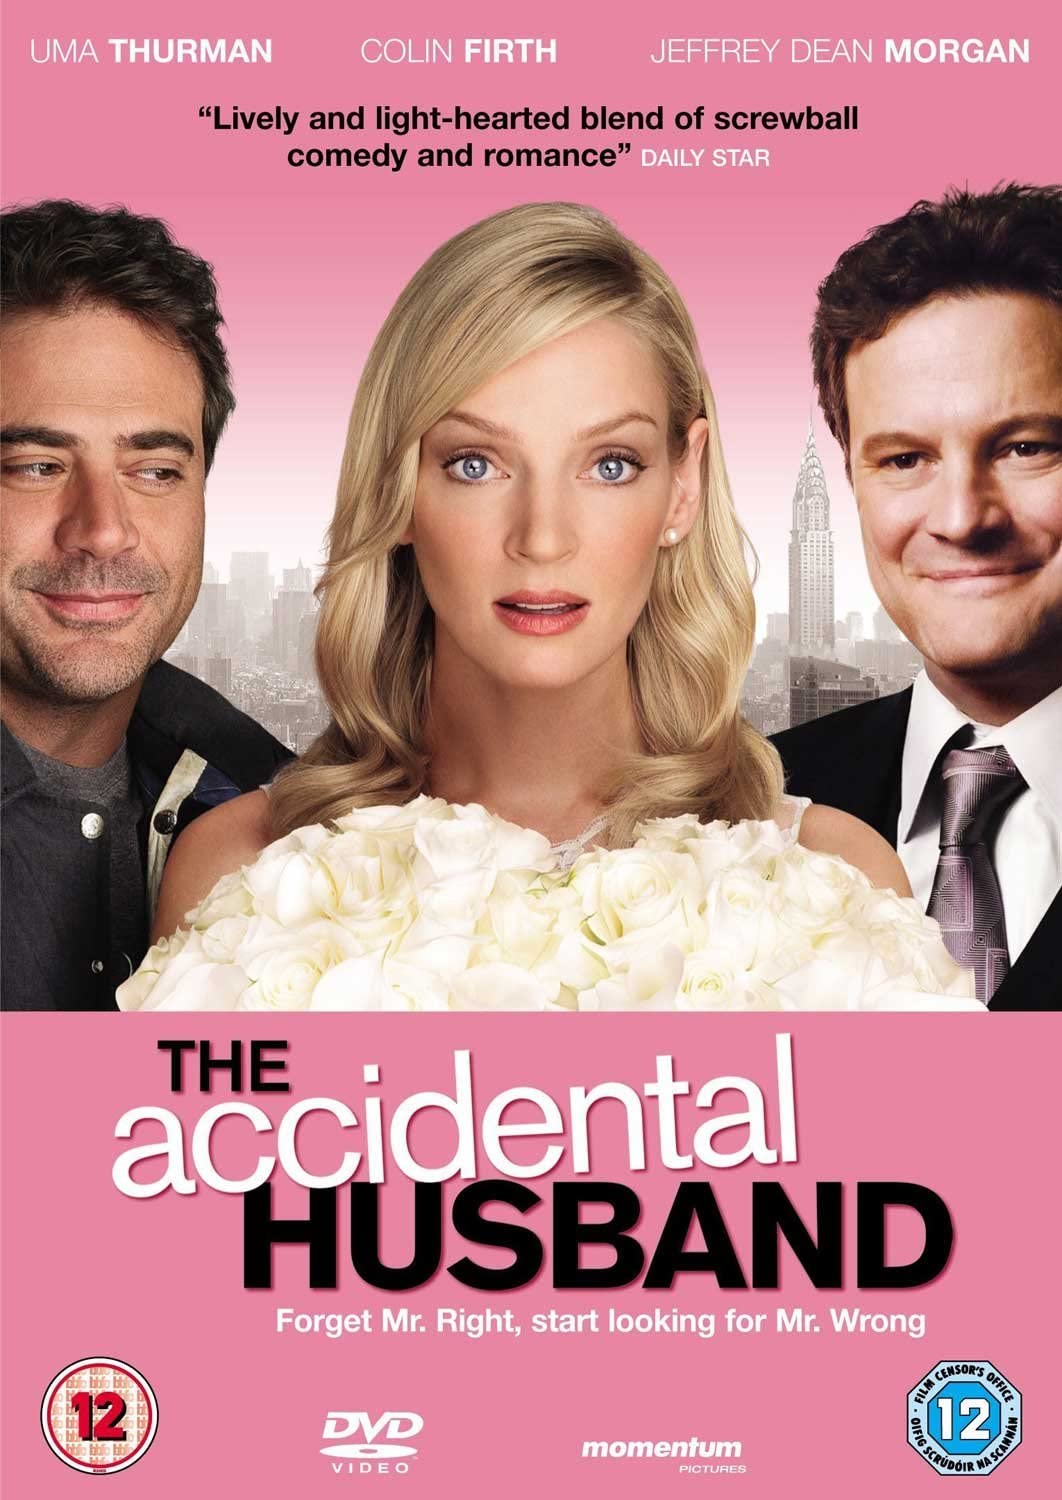 The Accidental Husband [2017] - Romance/Rom-com [DVD]